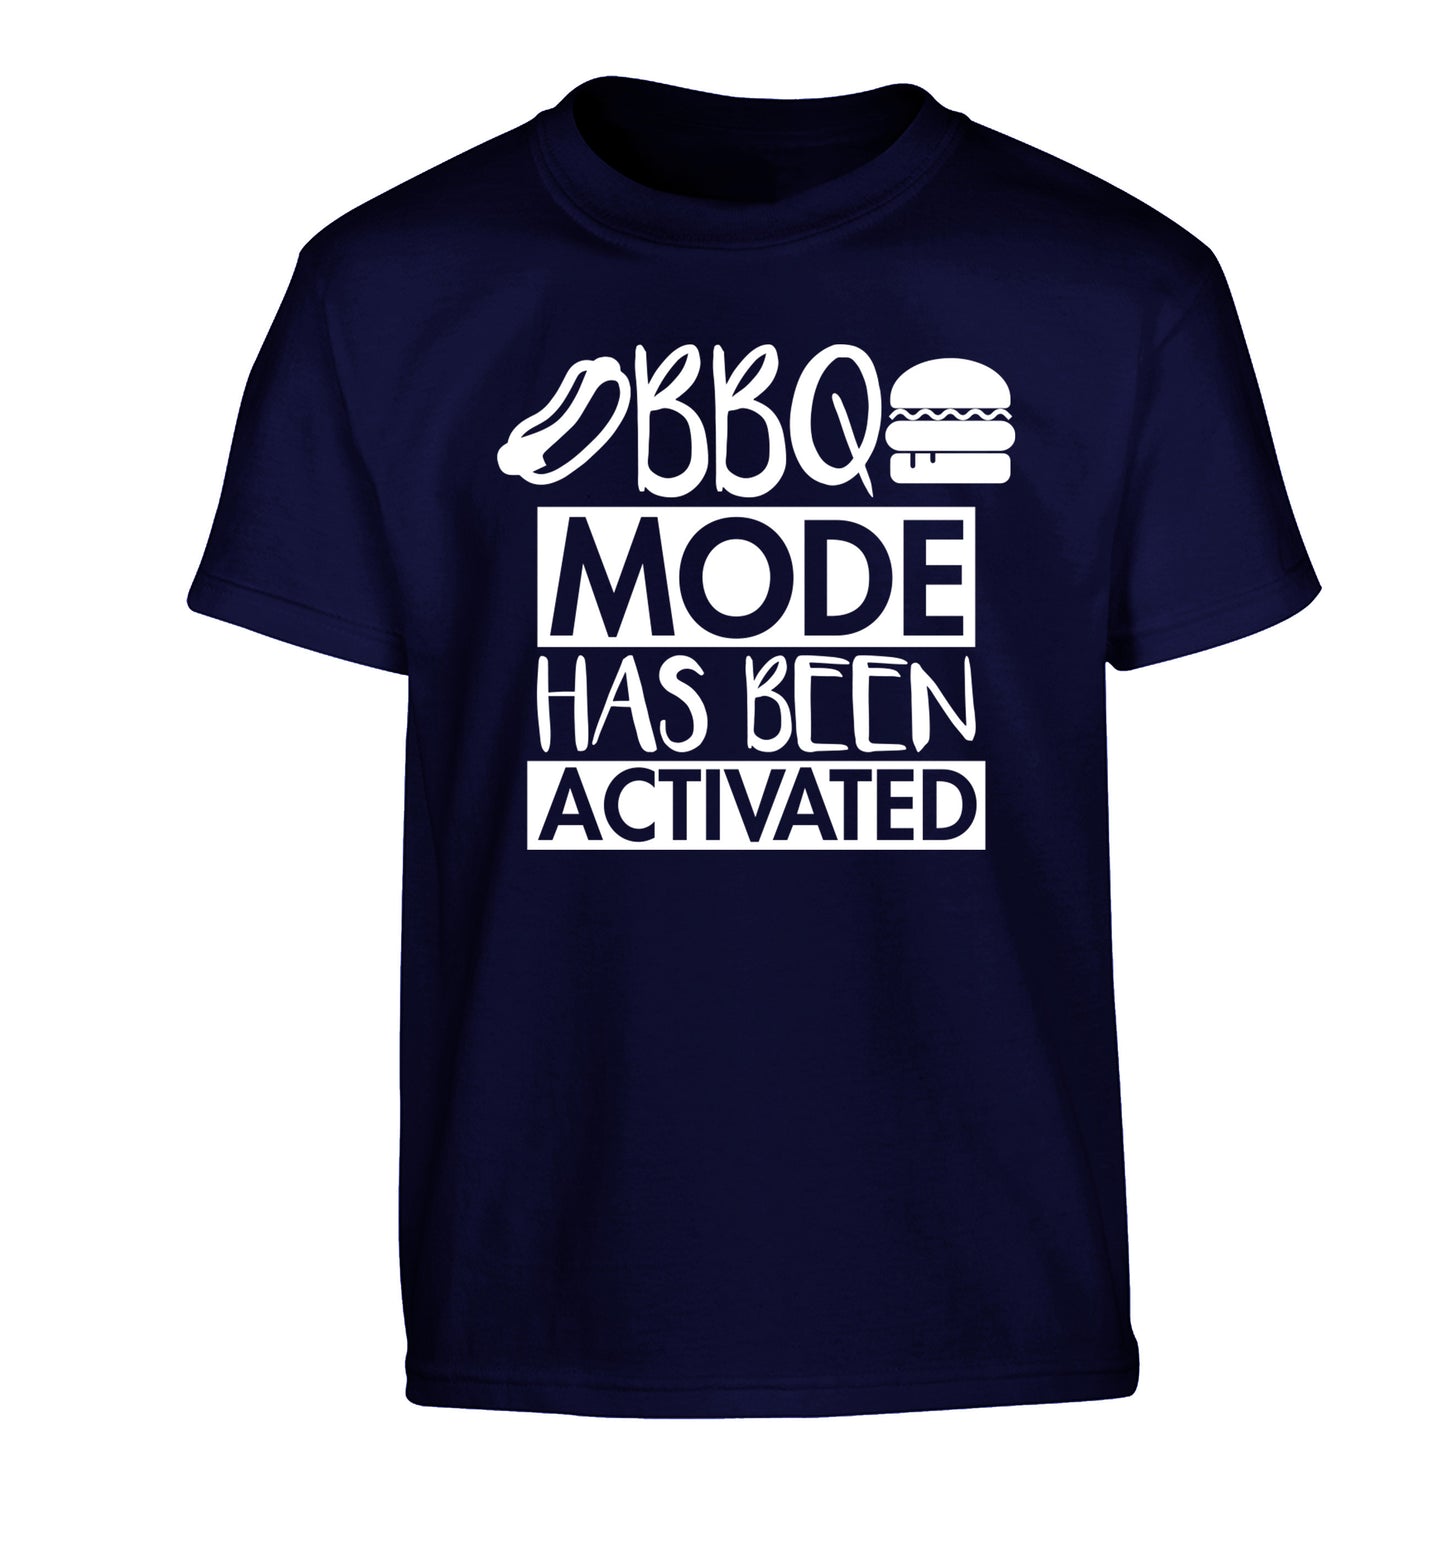 Bbq mode has been activated Children's navy Tshirt 12-14 Years